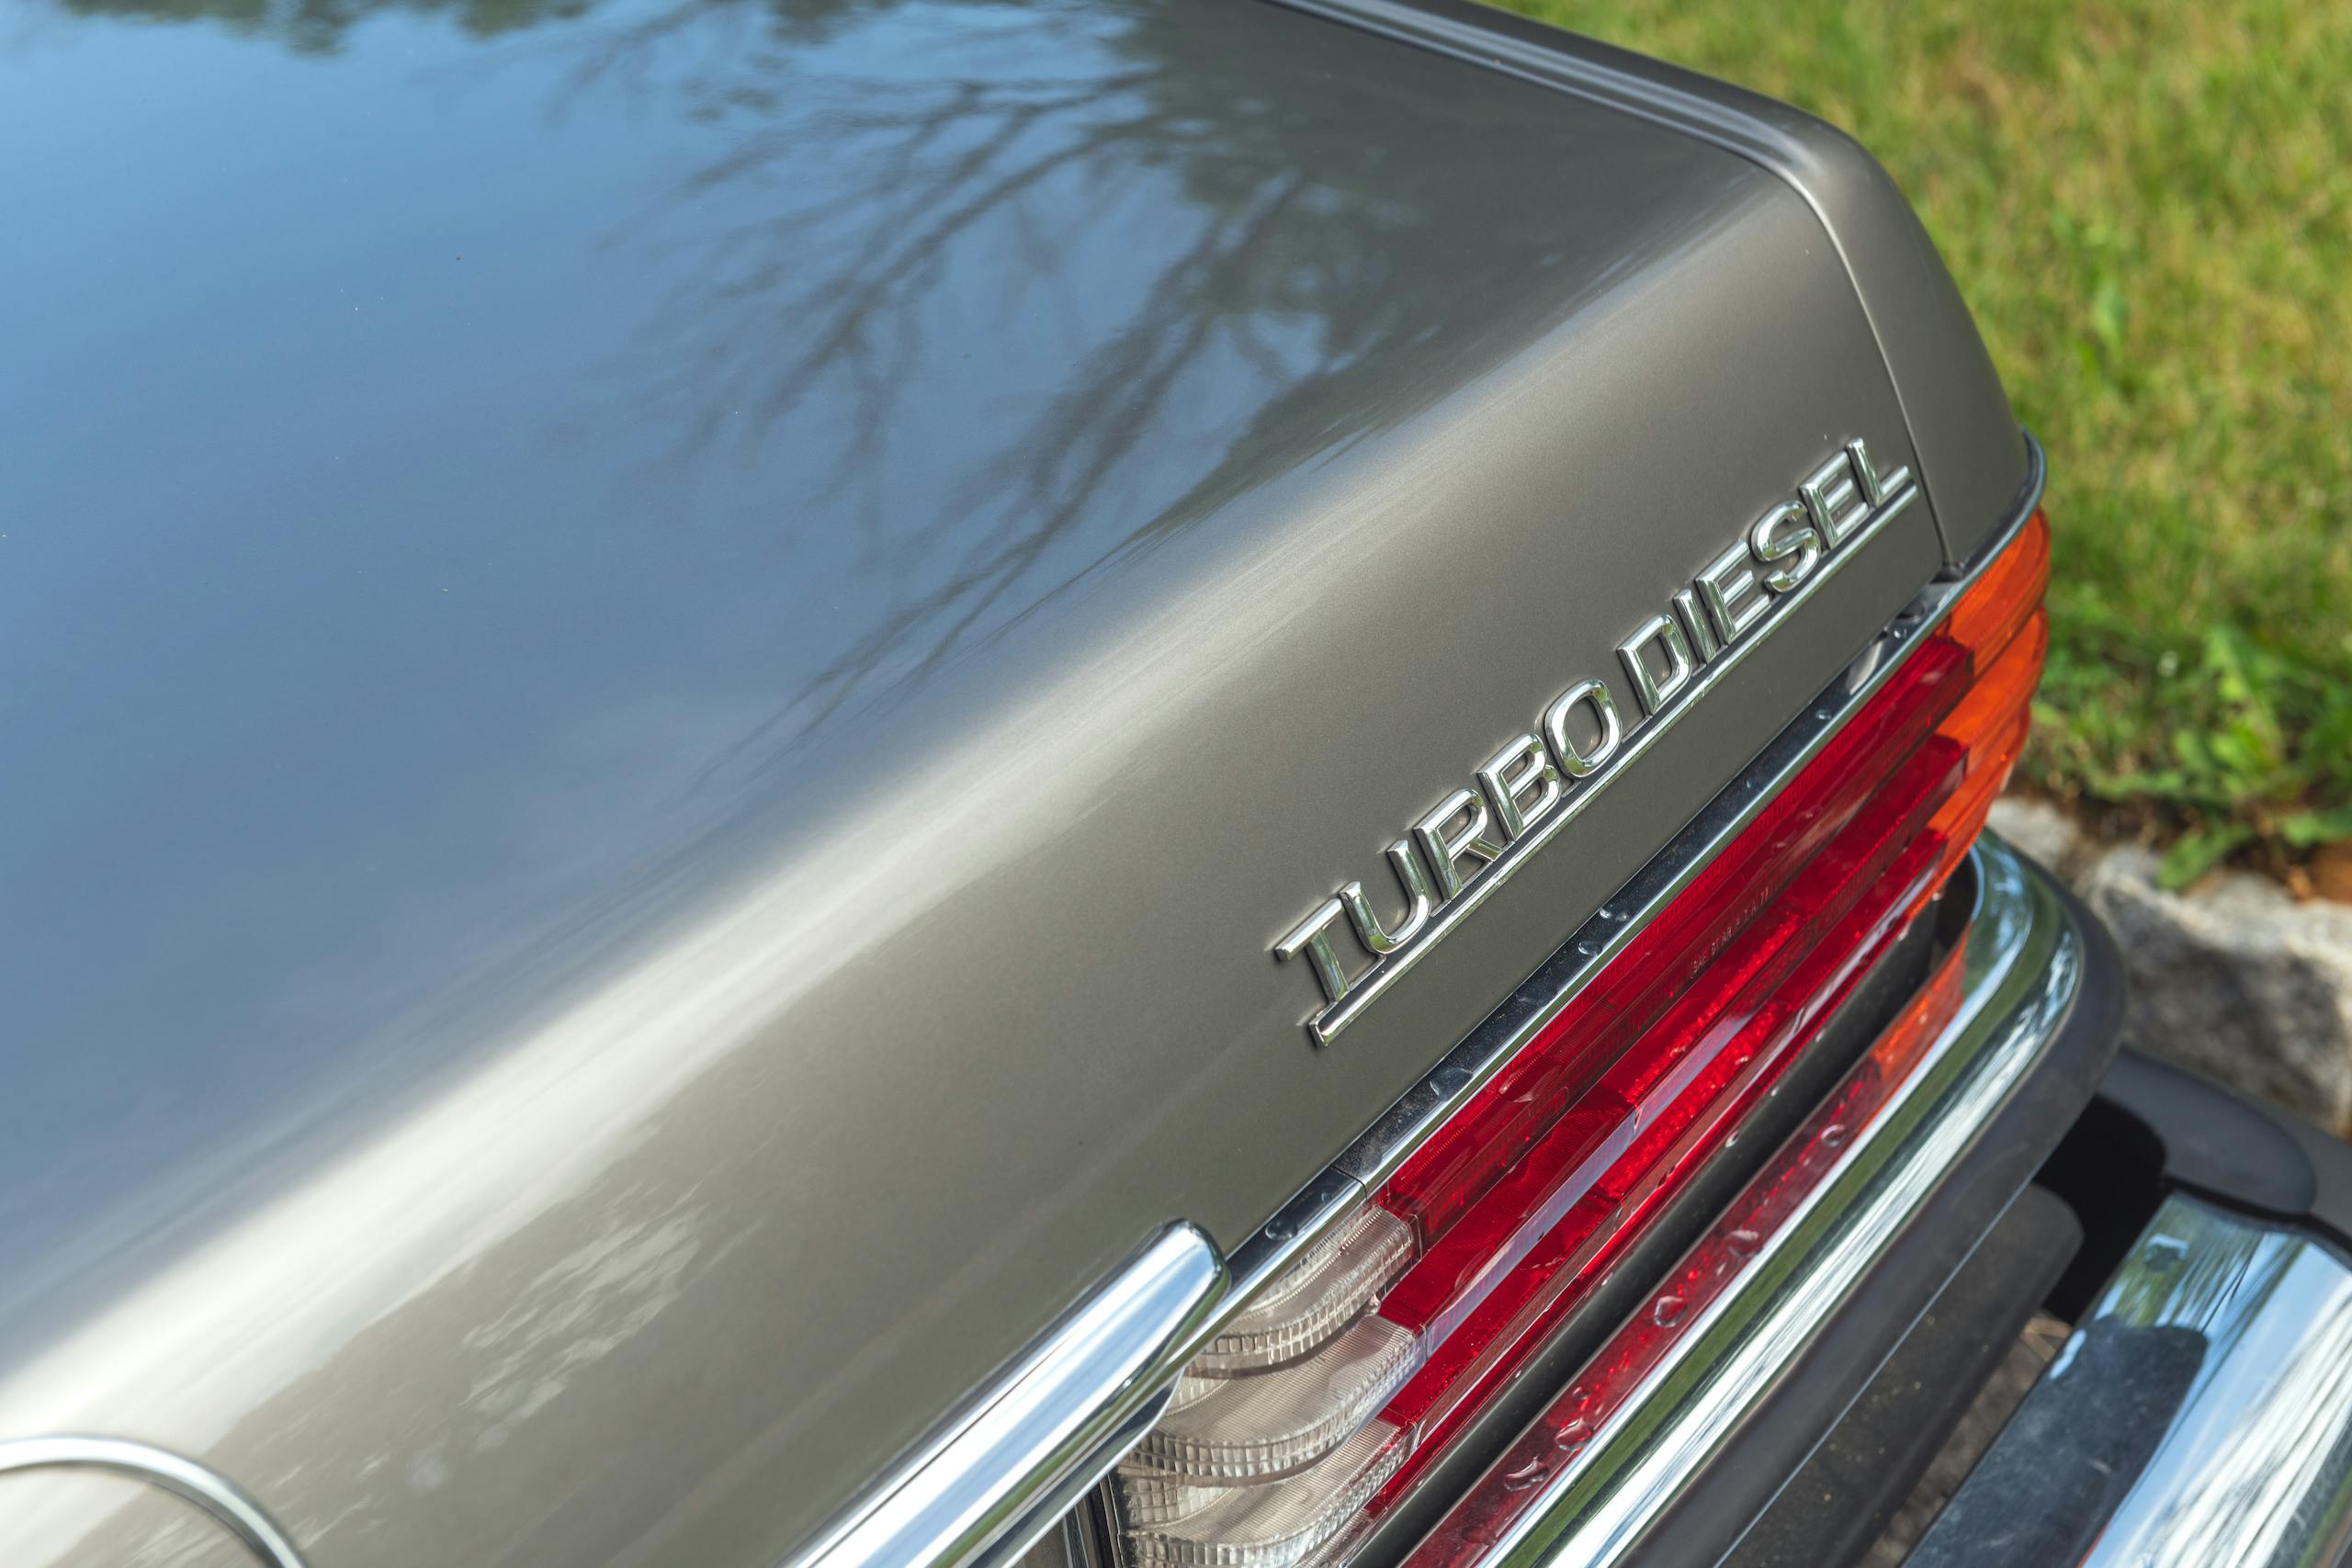 Jaime Kopchinski Mercedes Benz Expert Shop turbo diesel lettering detail